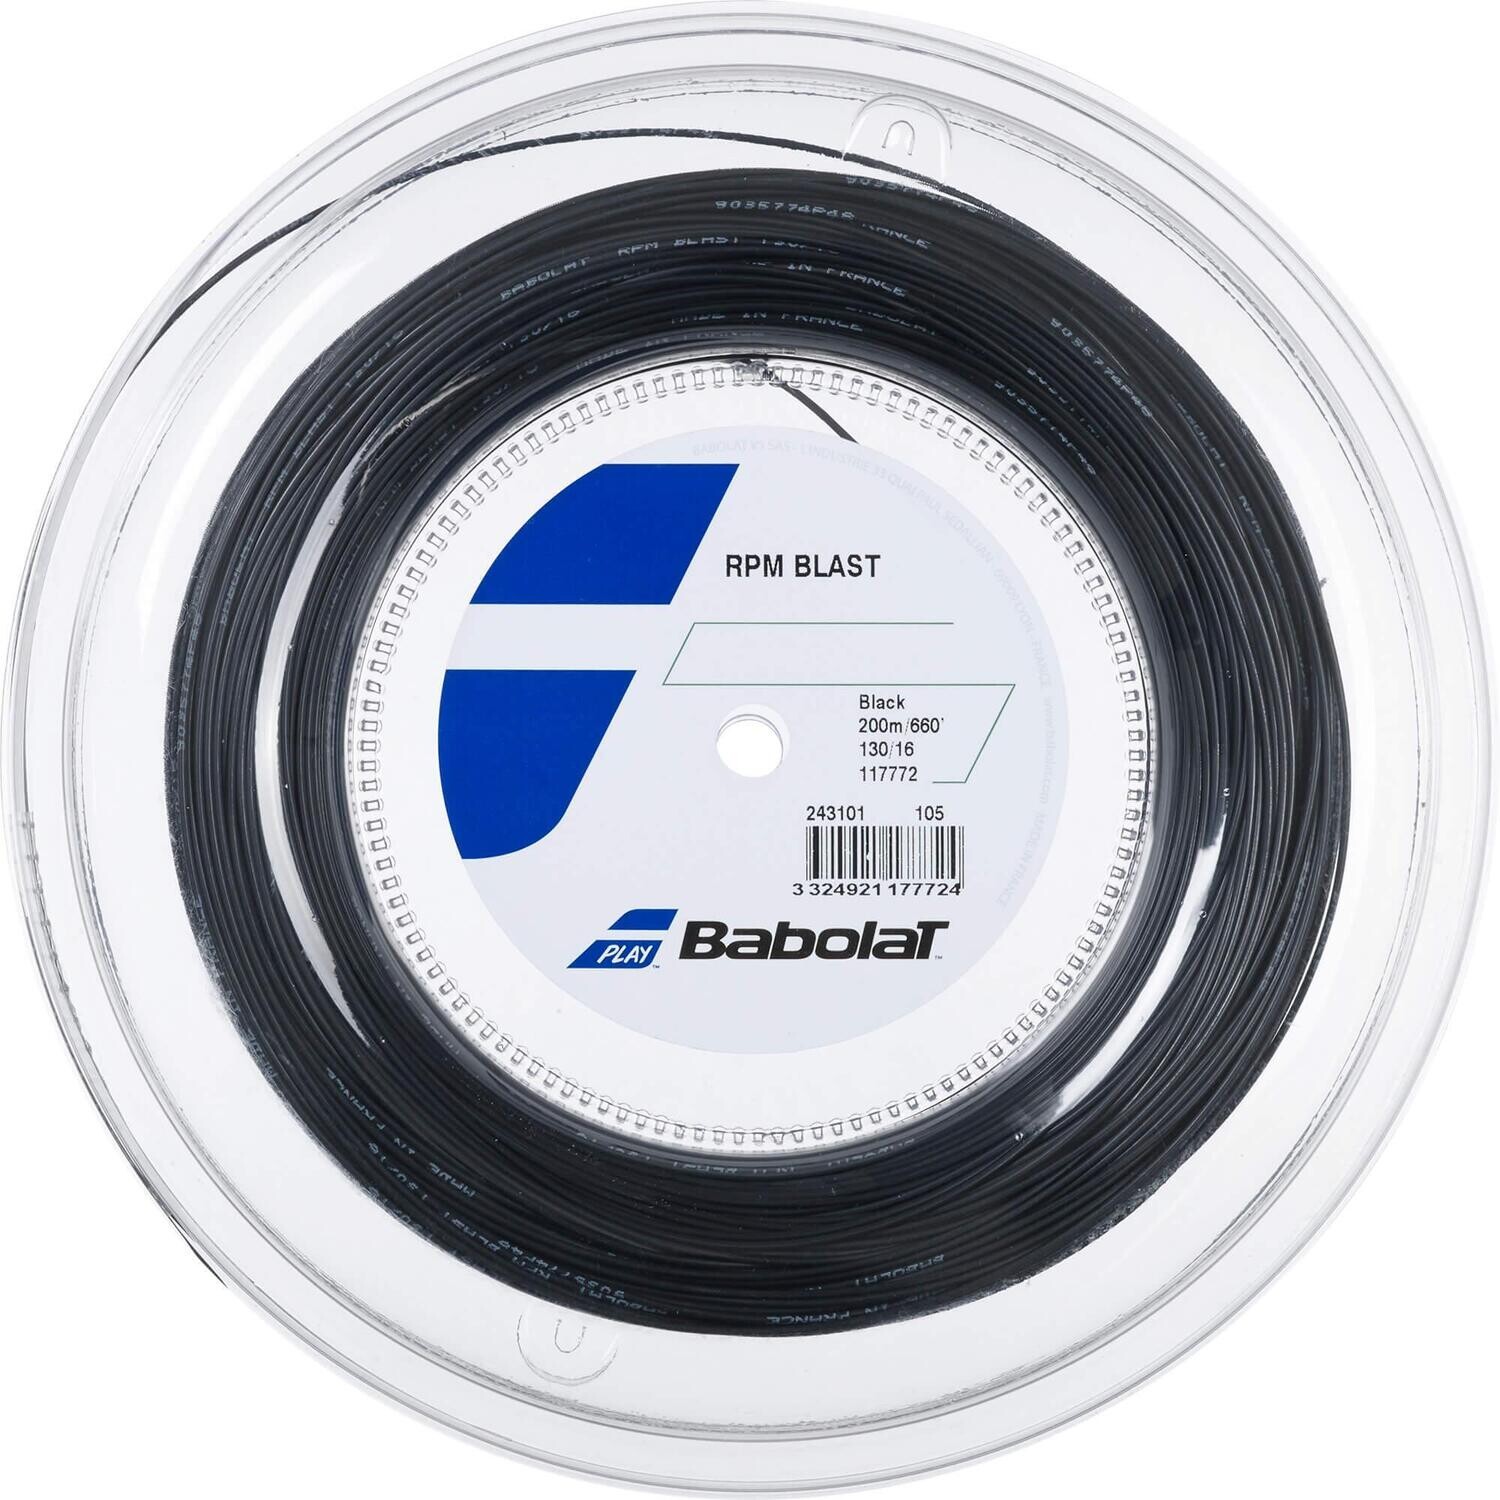 Babolat RPM Blast Tennis String 200m Reel - Black